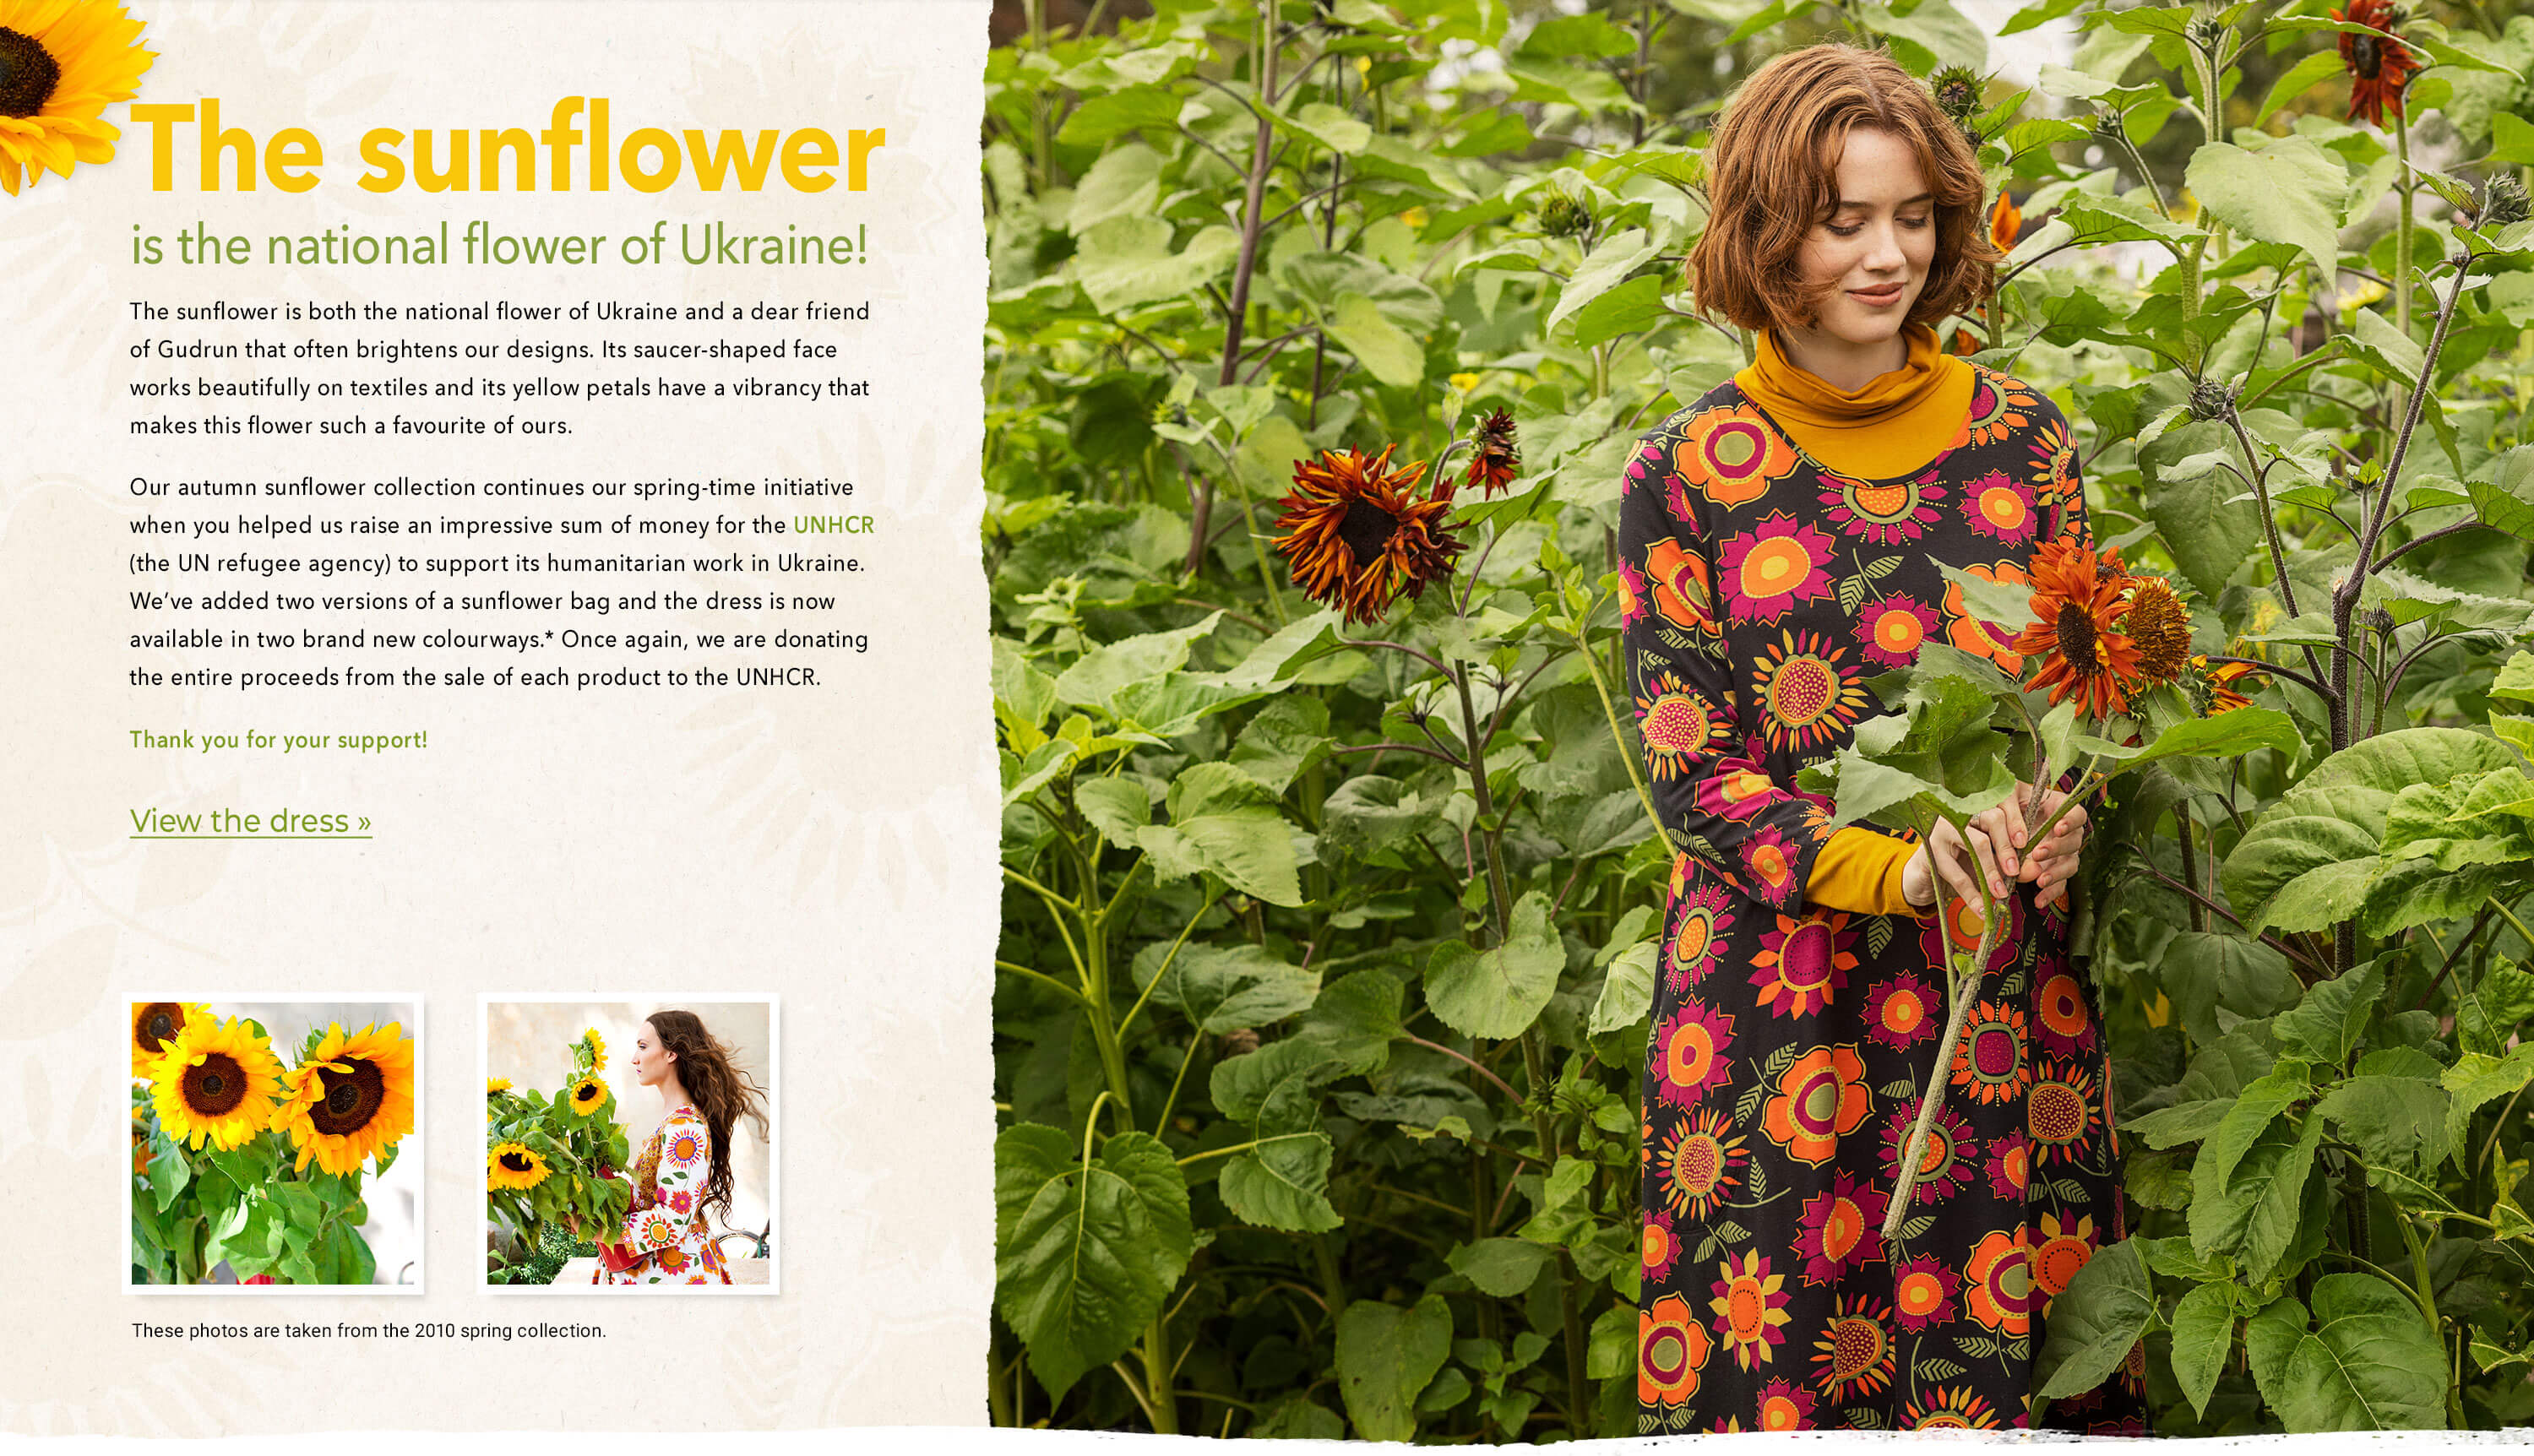 The sunflower is the national flower of Ukraine